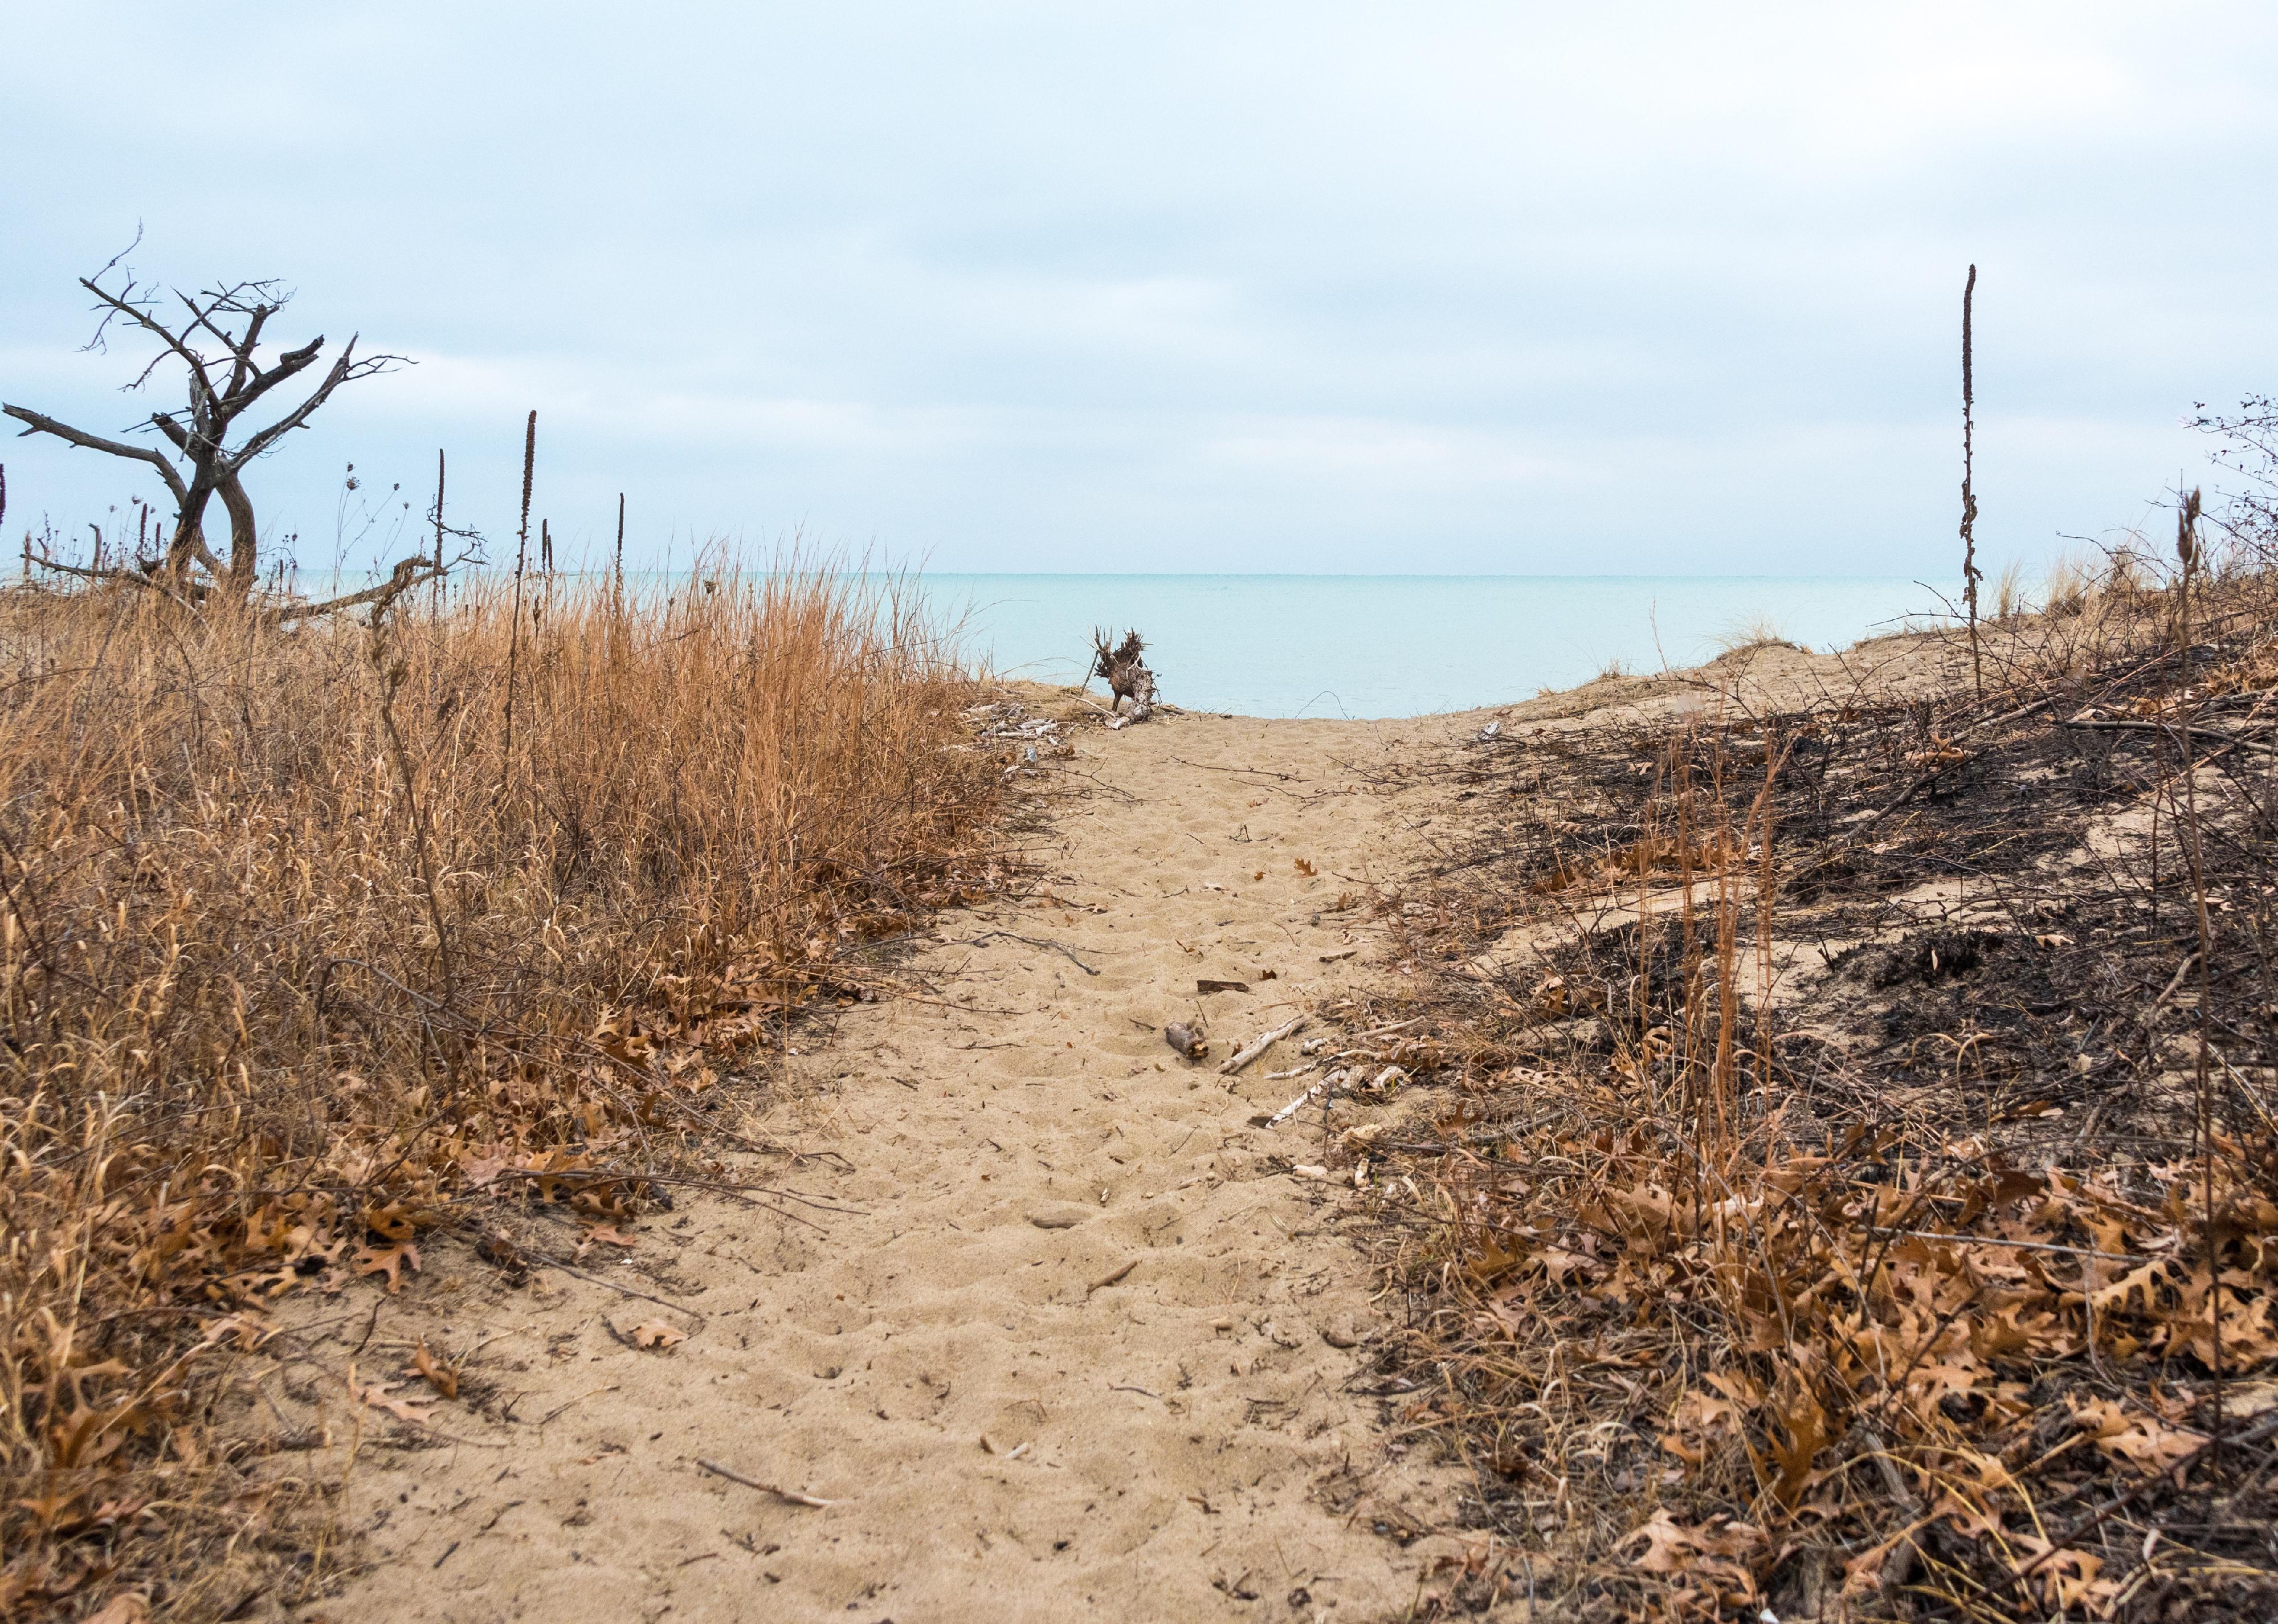 Trail through sand dunes on beach on Lake Michigan.